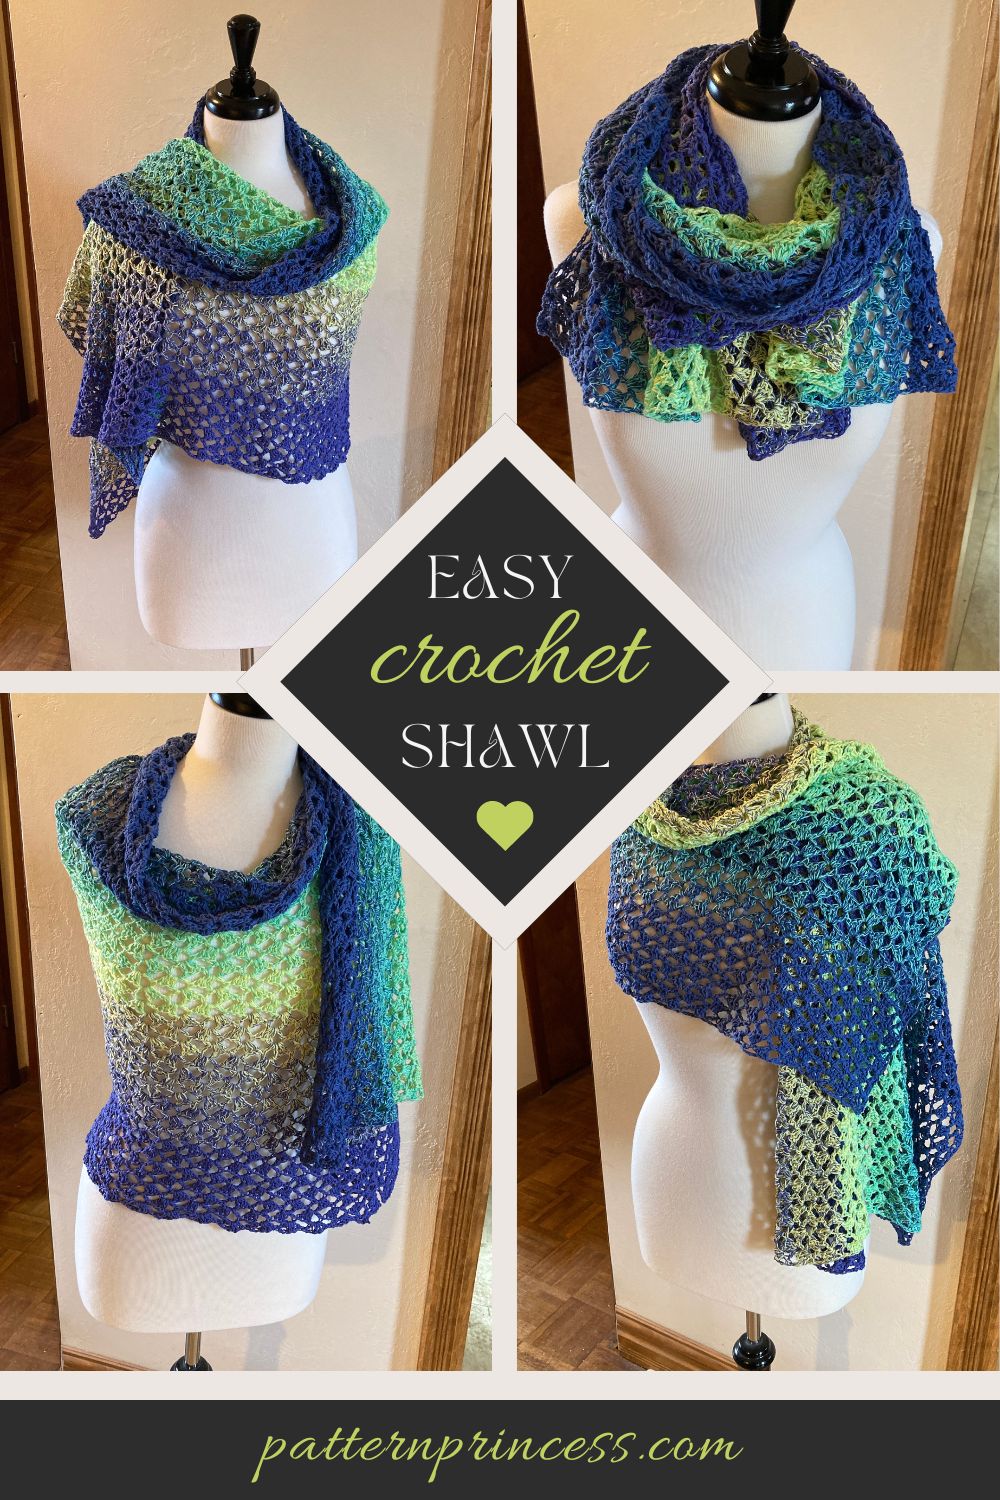 Four Views of the Easy Crochet Shawl